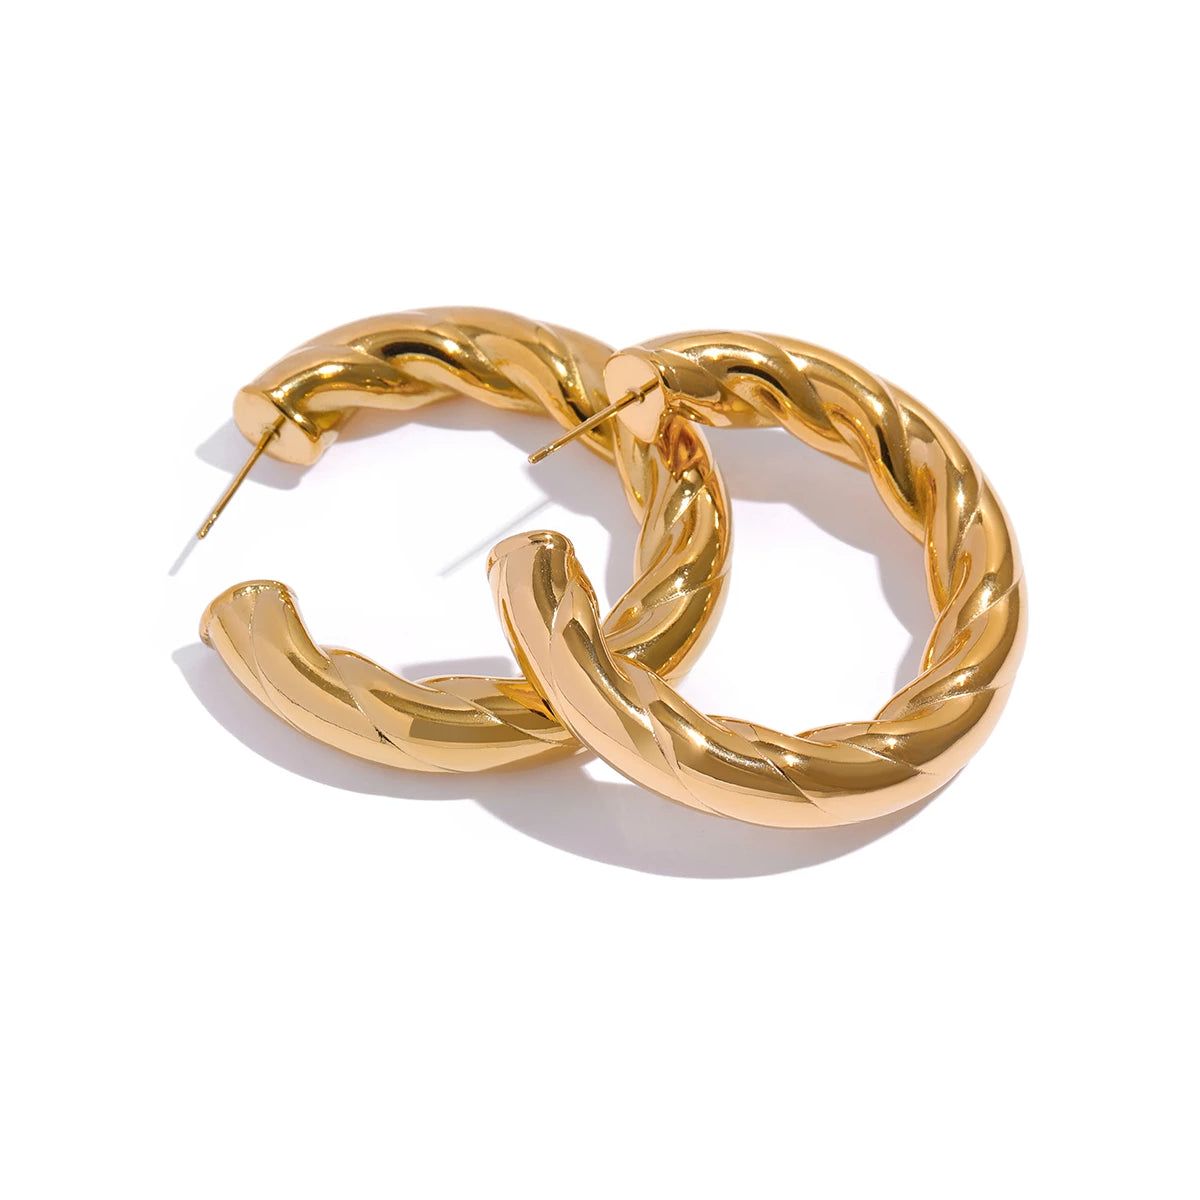 Runde Ohrringe Yasemen Store Schmuck Accessoires Edelstahl Stainless Steel 14K Vergoldet Gold jewel jewelry earrings